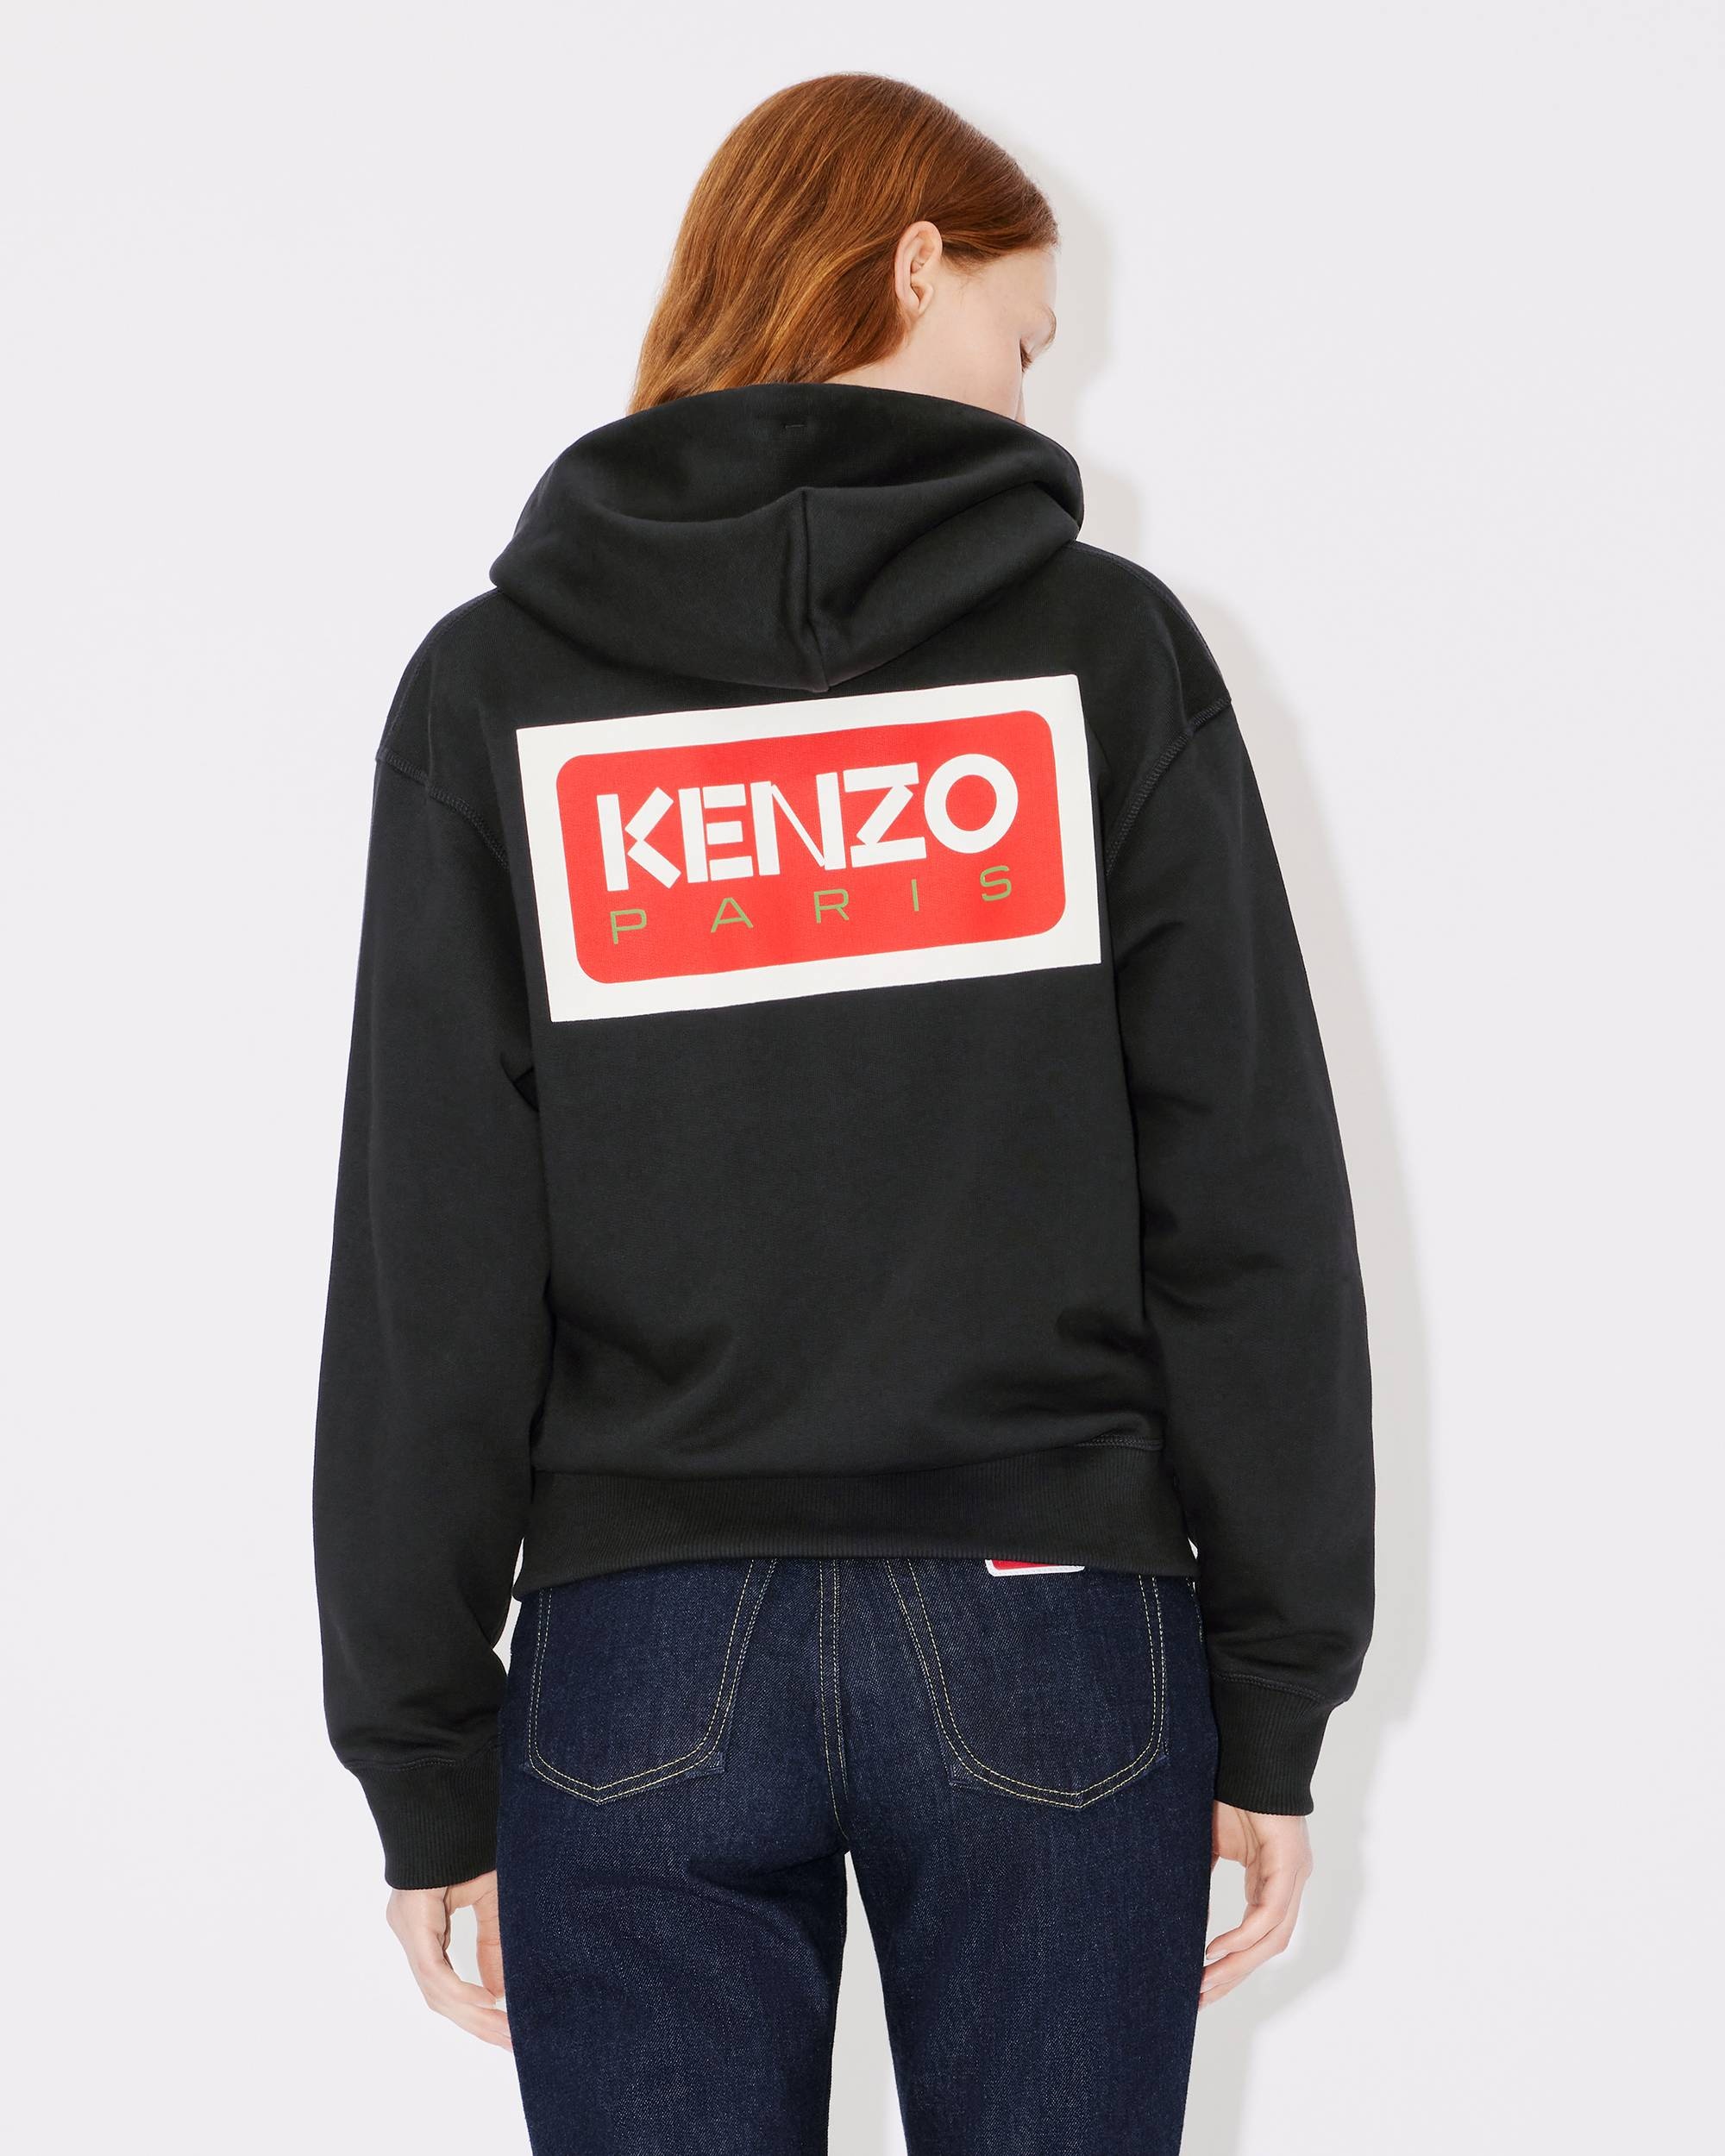 KENZO Paris zipped hoodie sweatshirt - 4